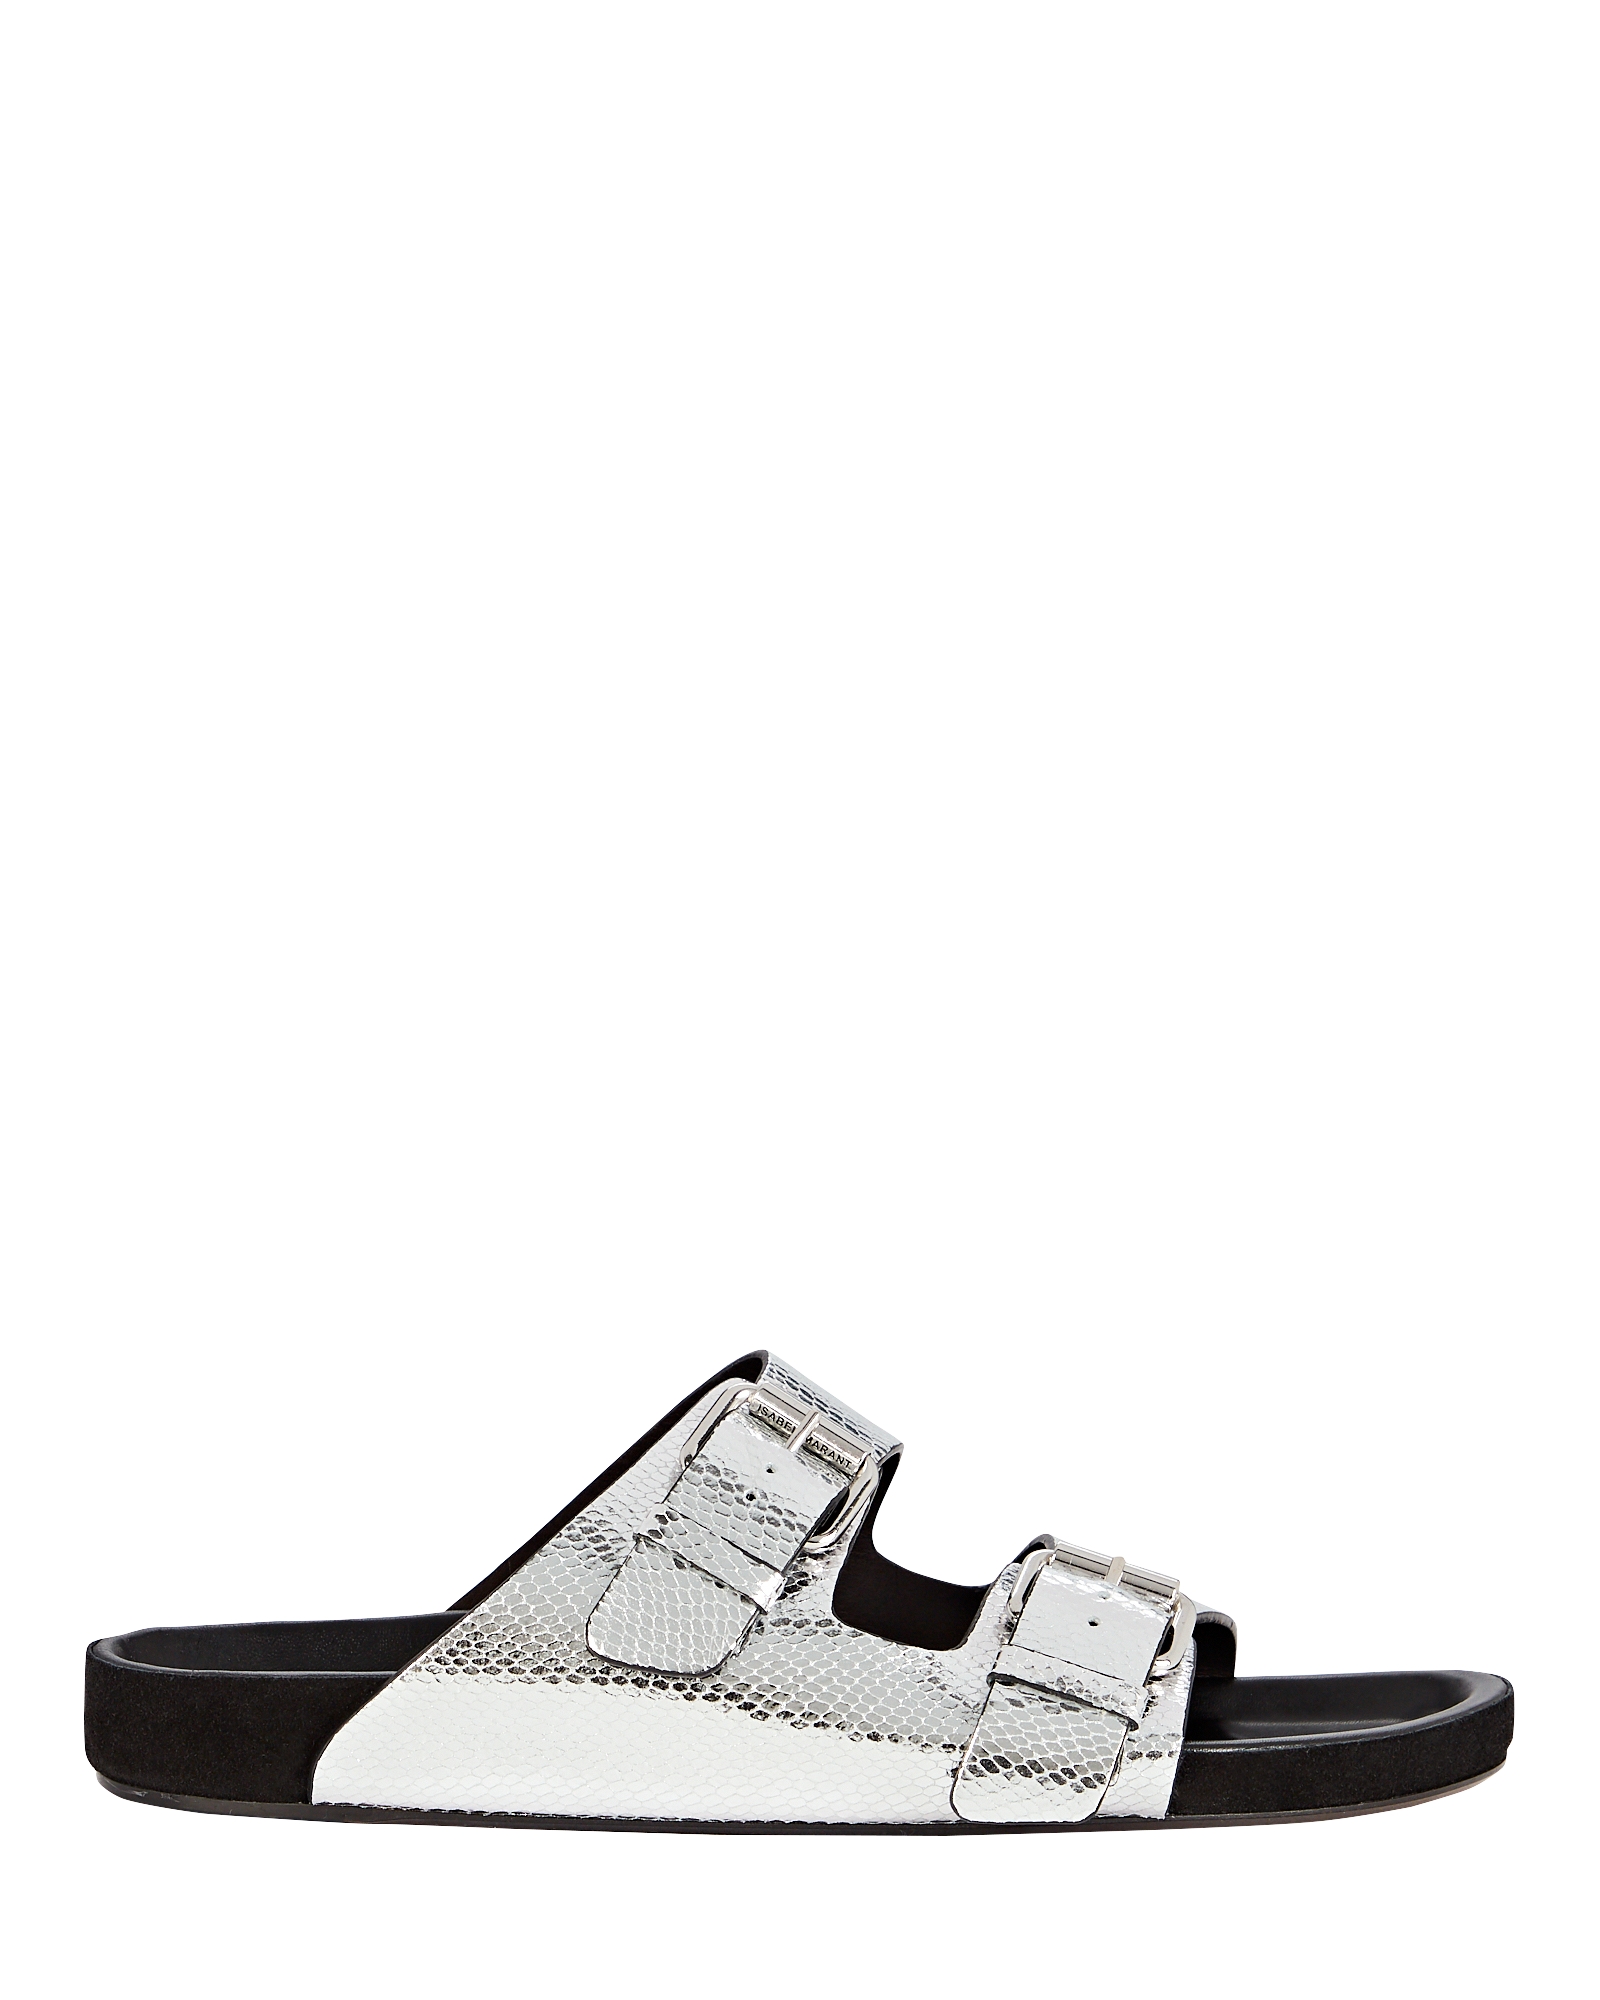 Isabel Marant Lennyo Leather Slide Sandals | INTERMIX®